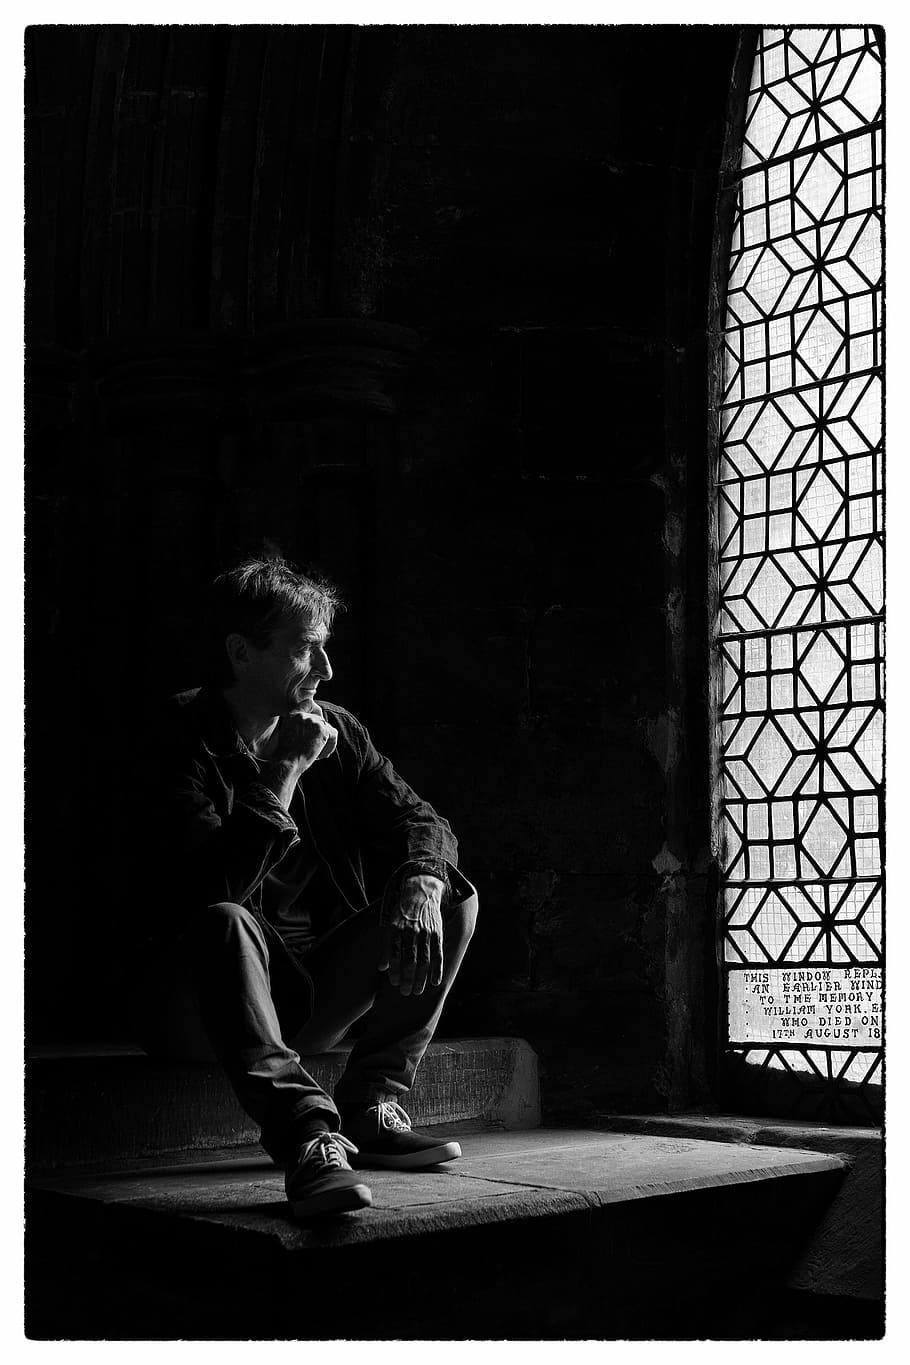 grayscale photography of man sitting on stairs near window, window light